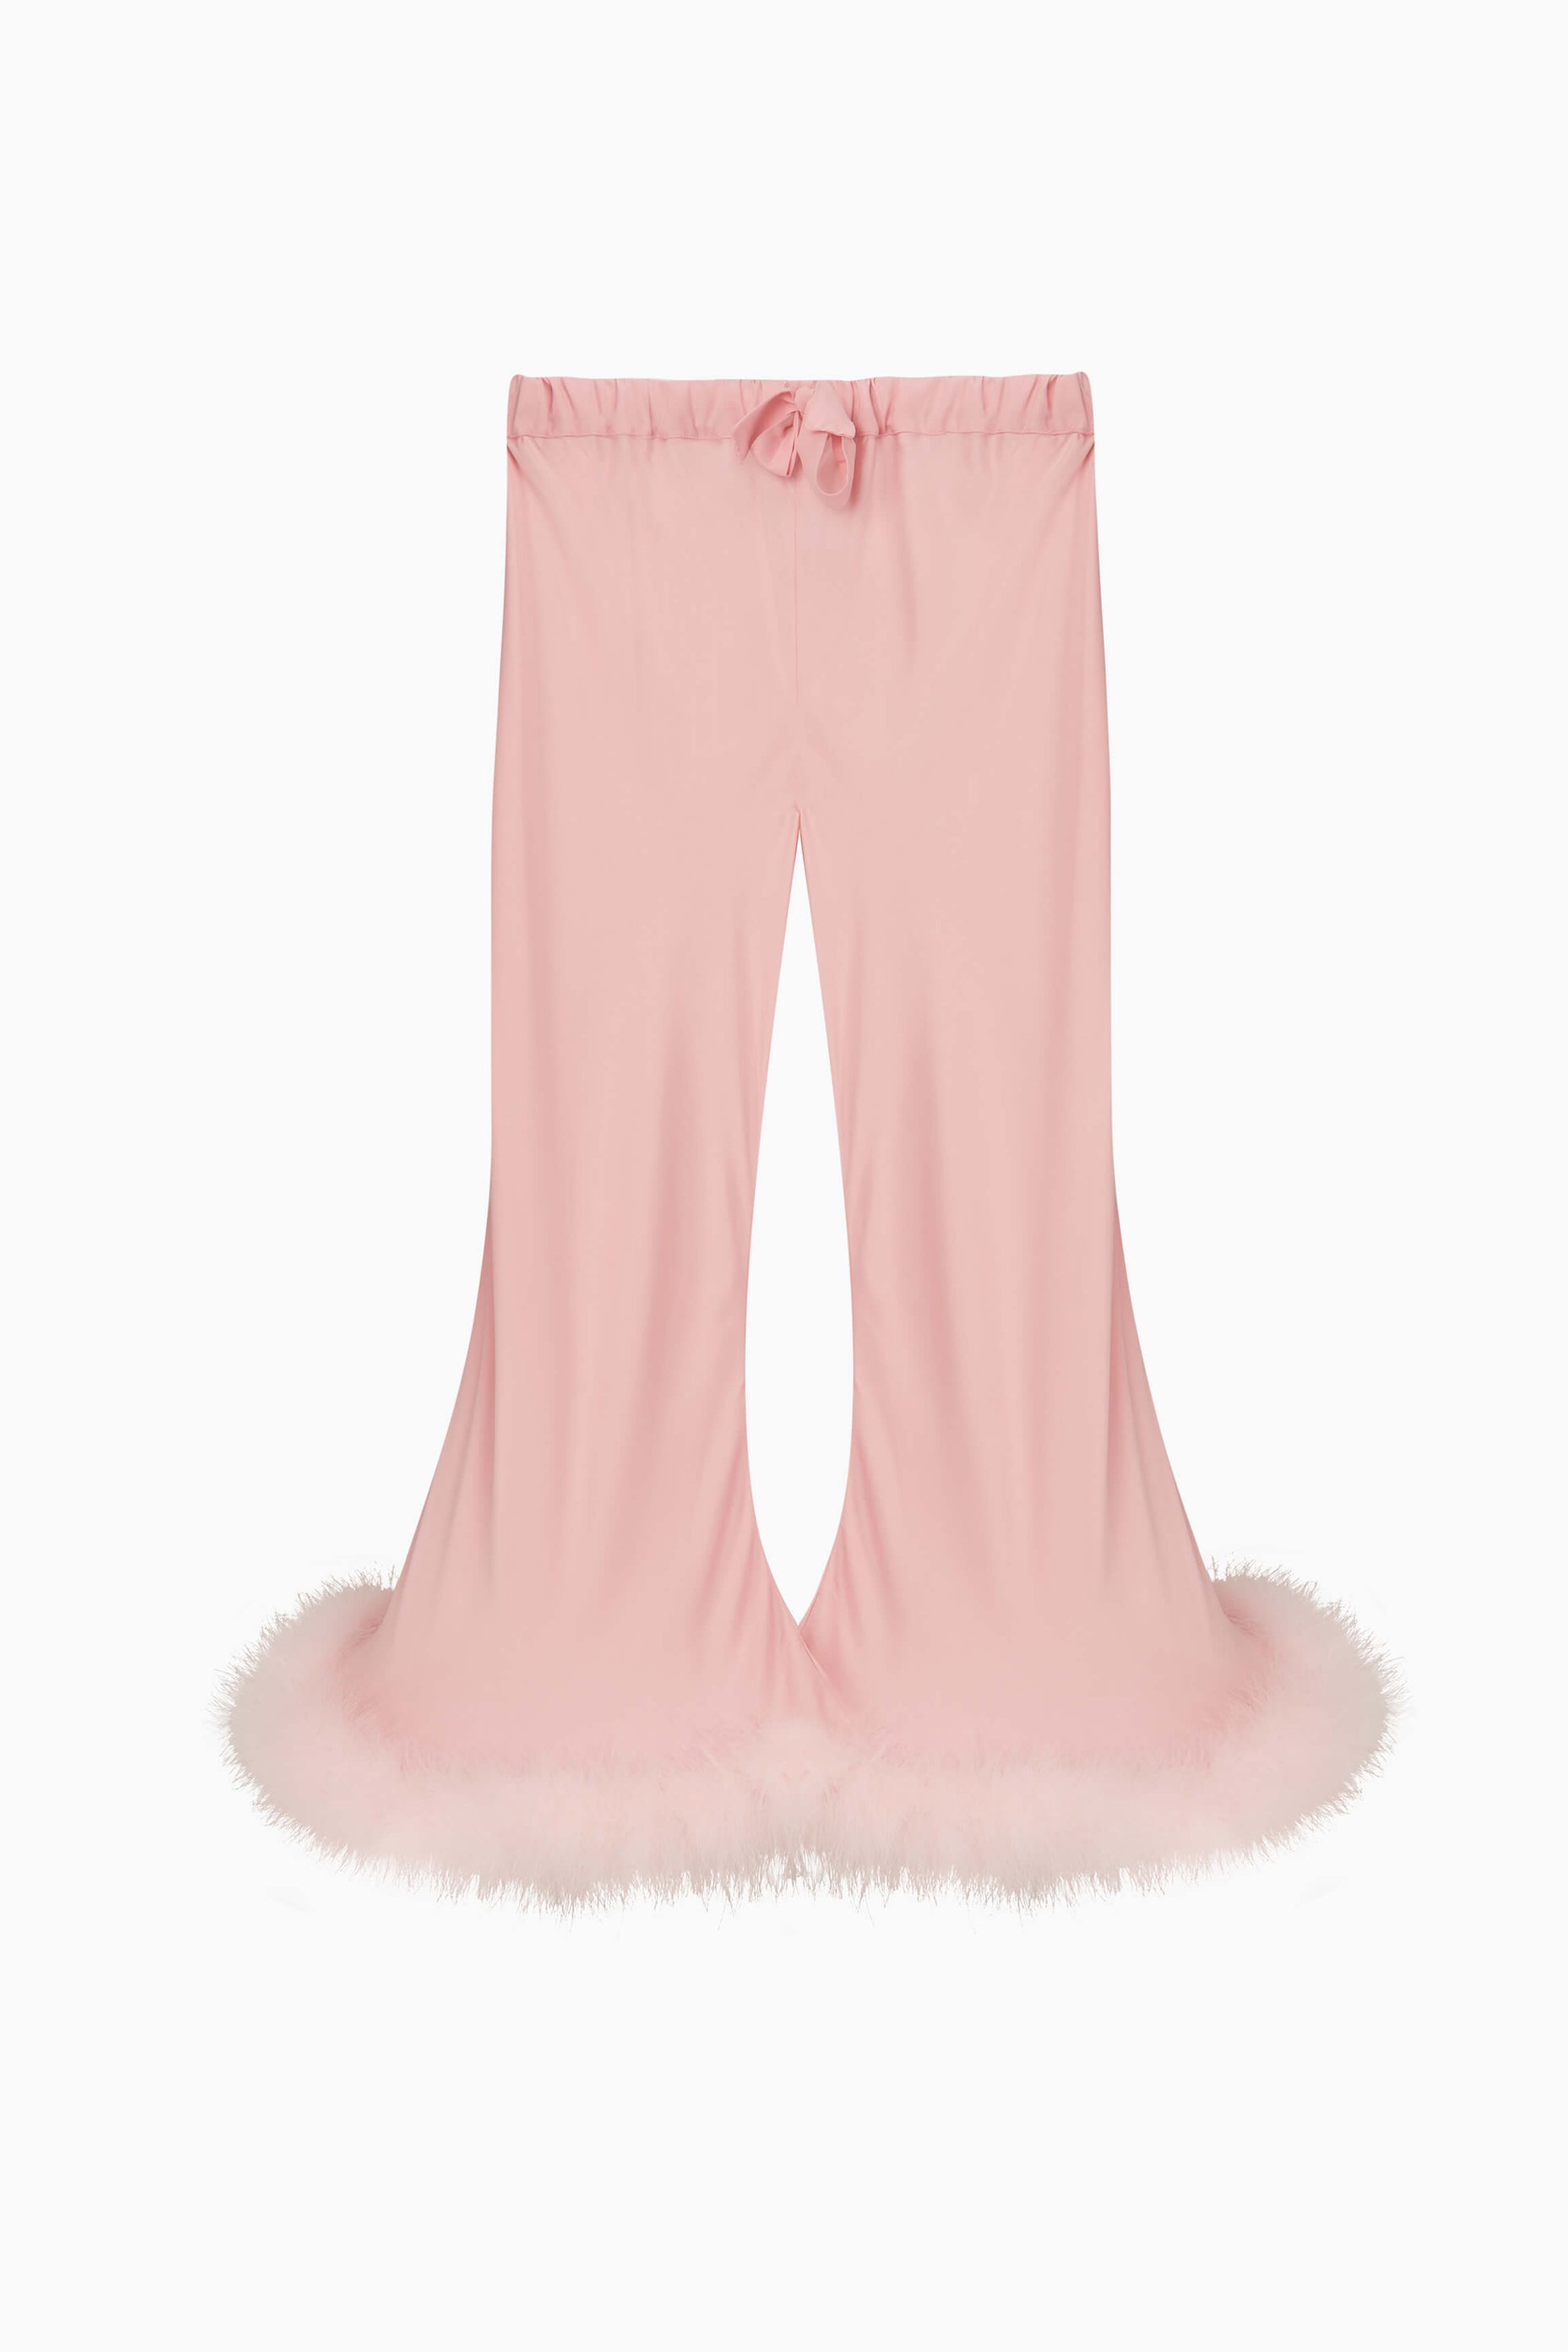 Women's Clothing - Island Club Wide Leg Pants - Pink